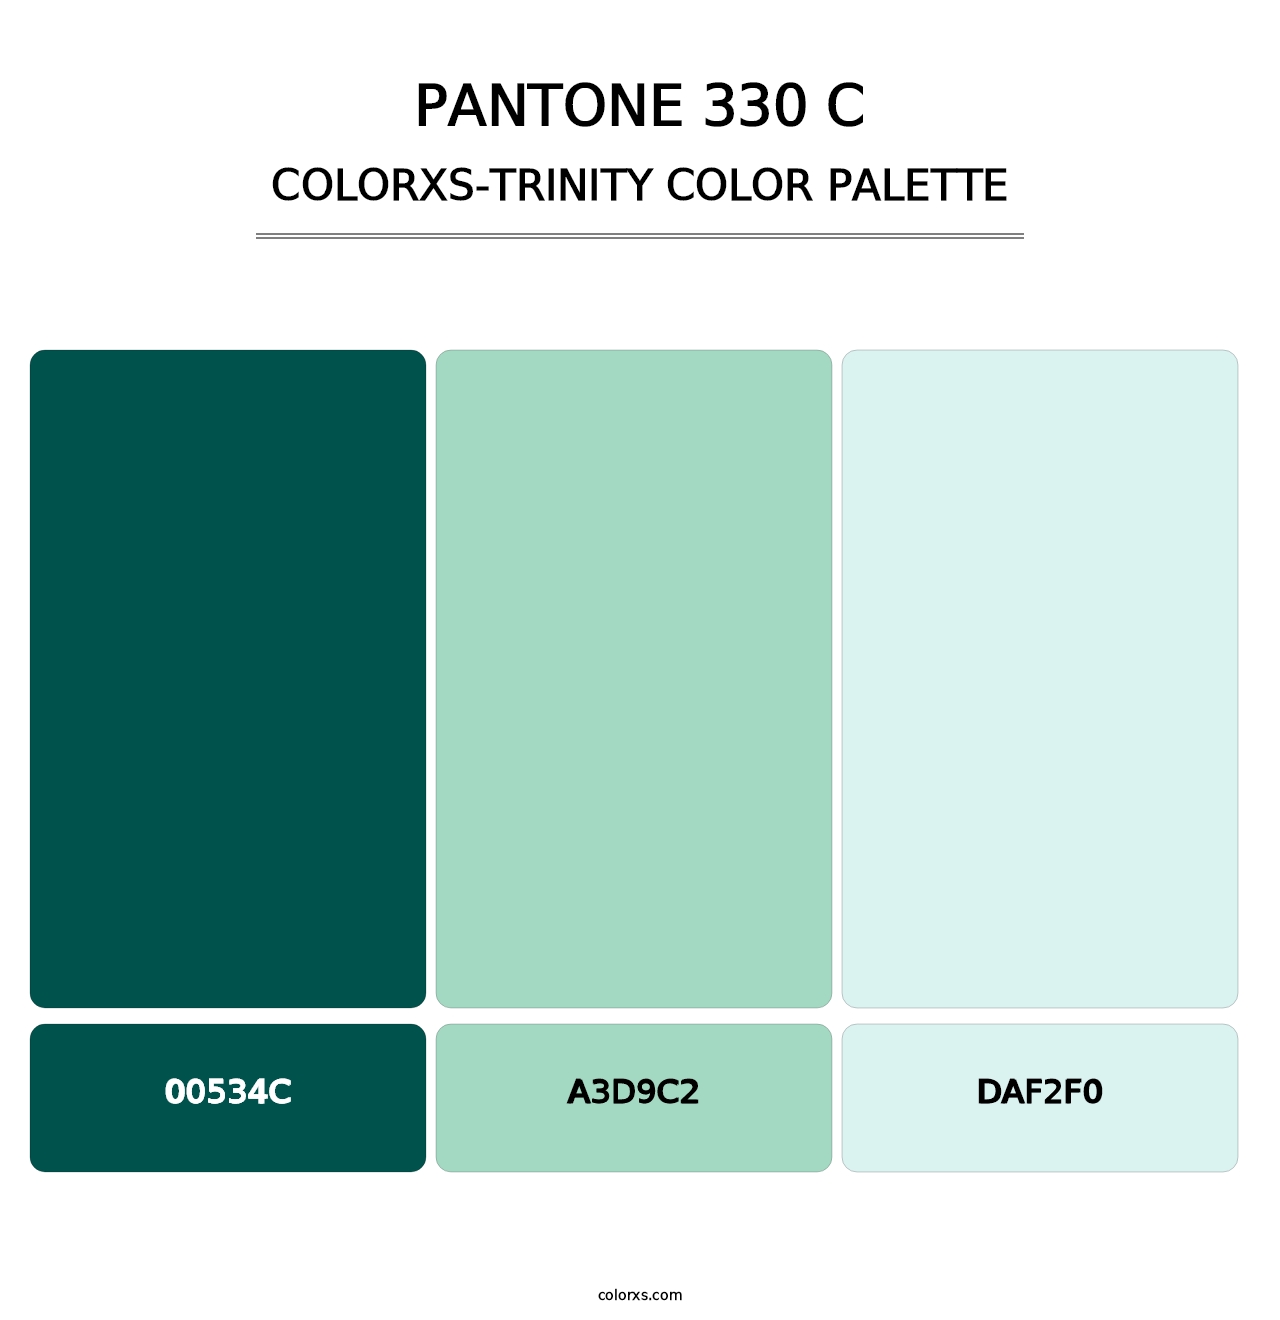 PANTONE 330 C - Colorxs Trinity Palette